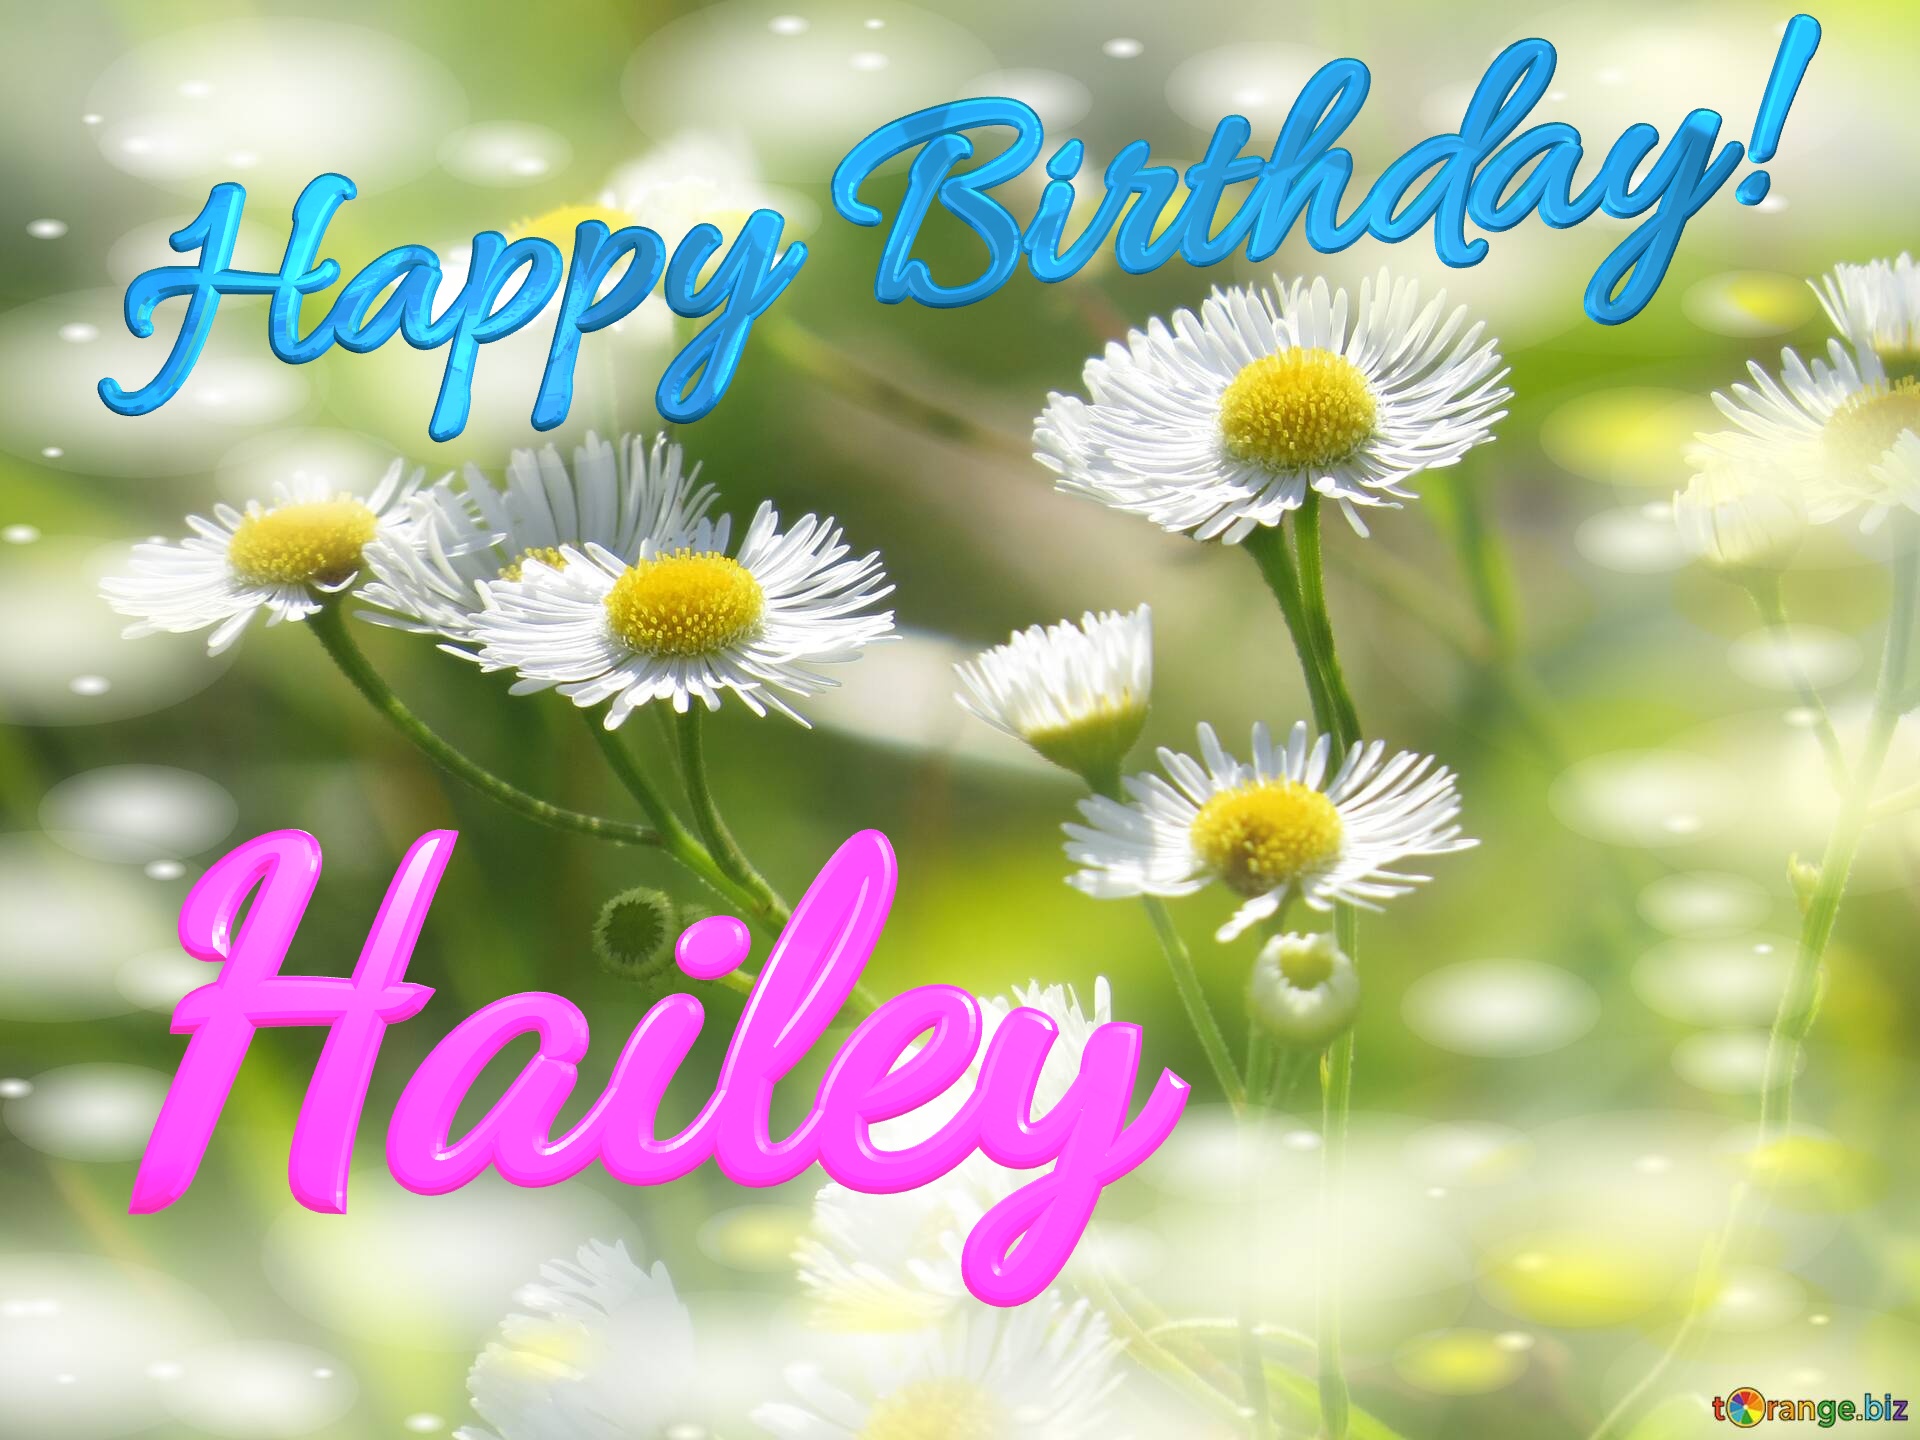 Hailey Happy Birthday! Daisies bokeh background №0